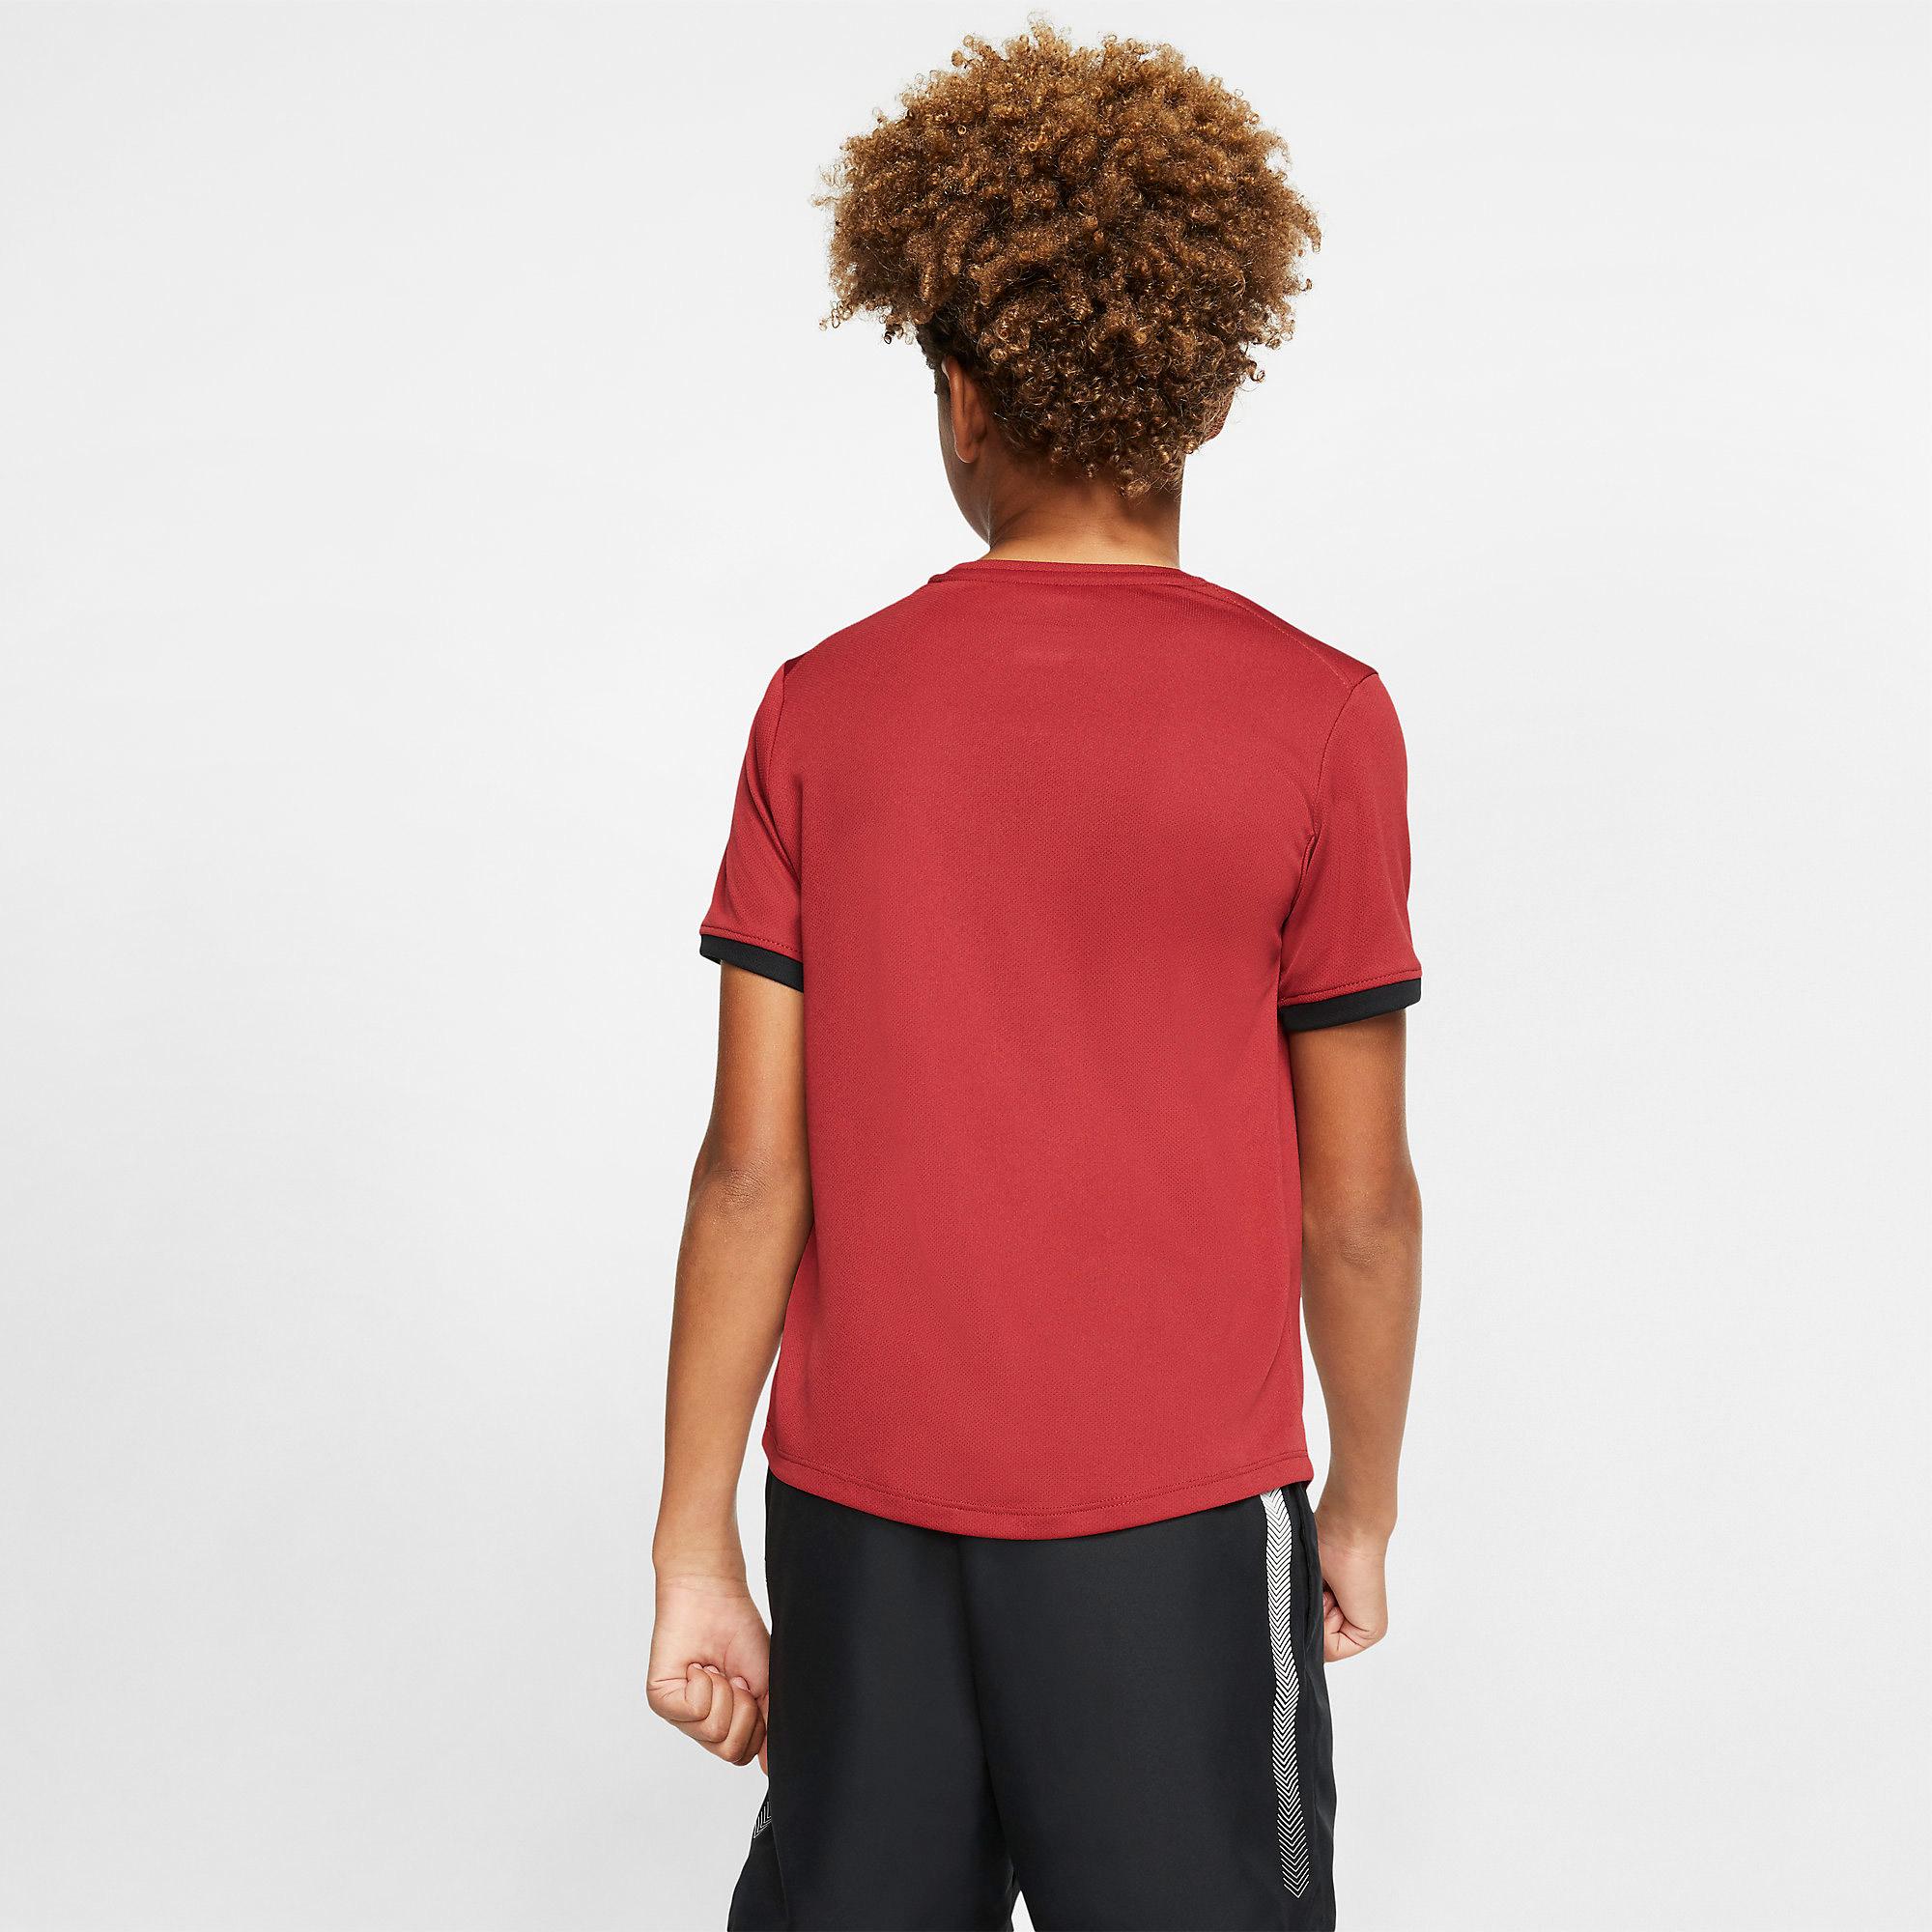 Nike Boys Dri-FIT Short Sleeve Tennis Top - Team Crimson/Black ...